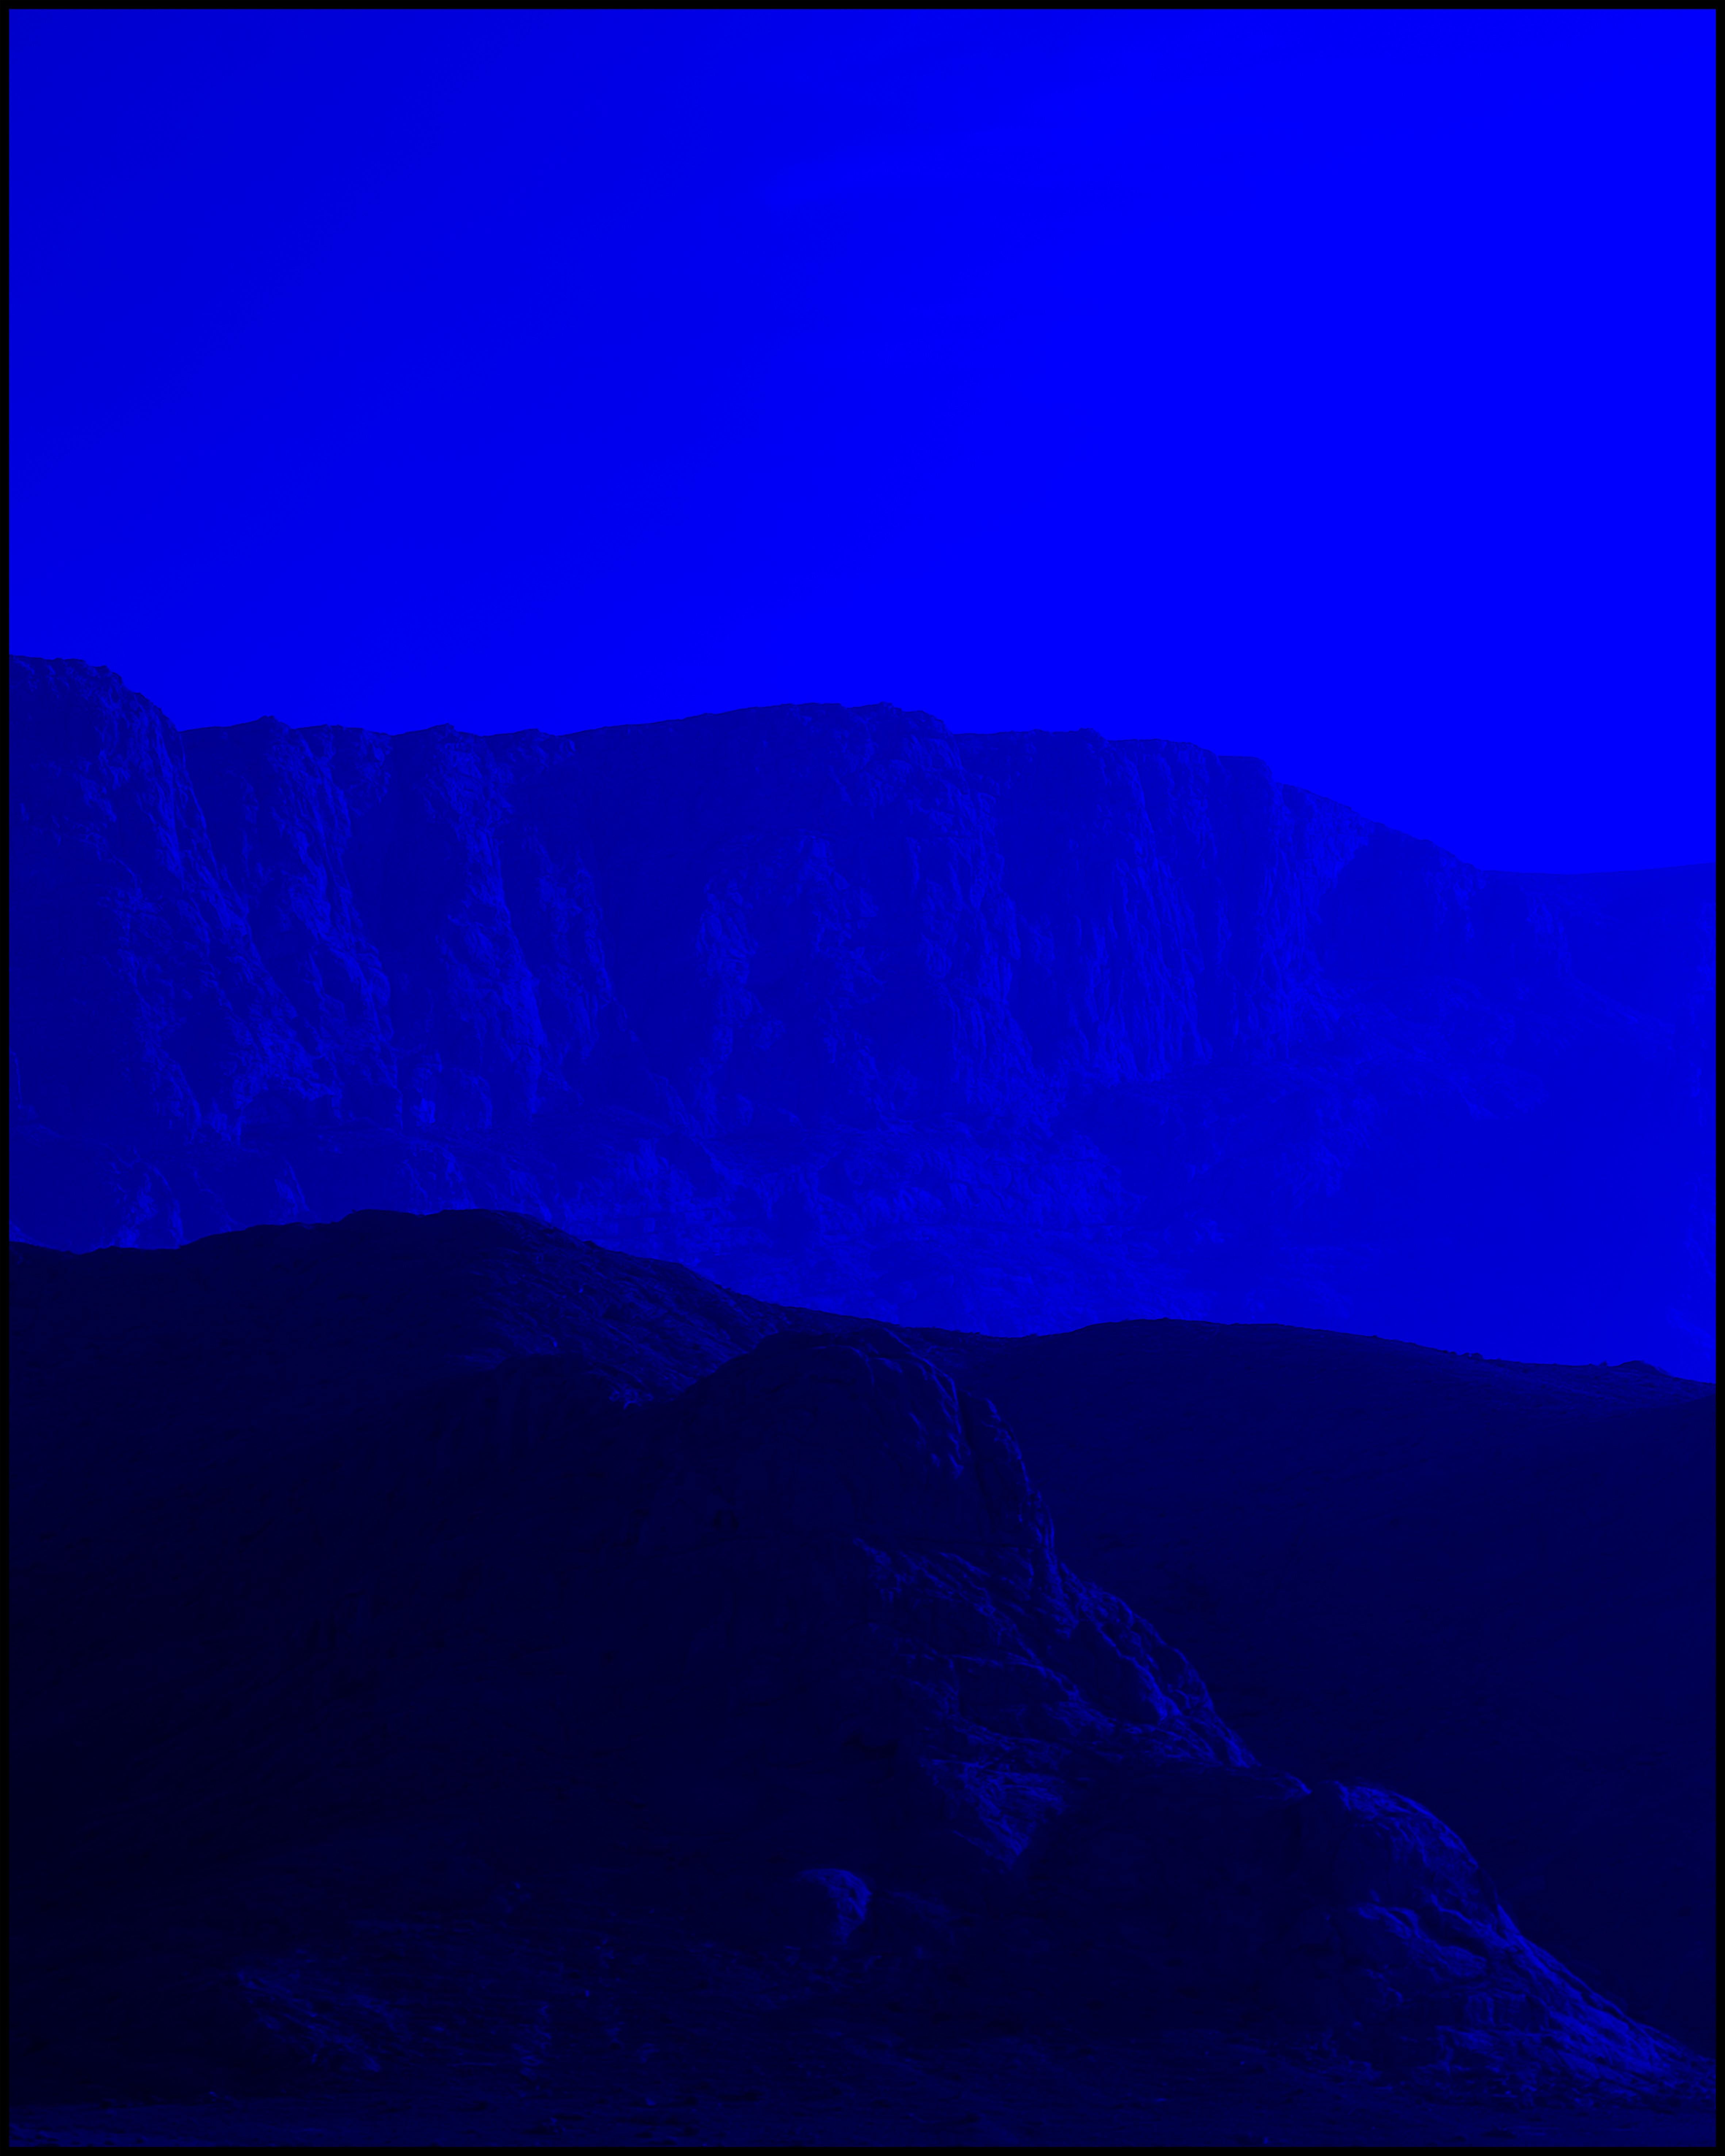 Ugne Pouwell Color Photograph - Ultramarine hills - monocolor blue photography of desert dunes